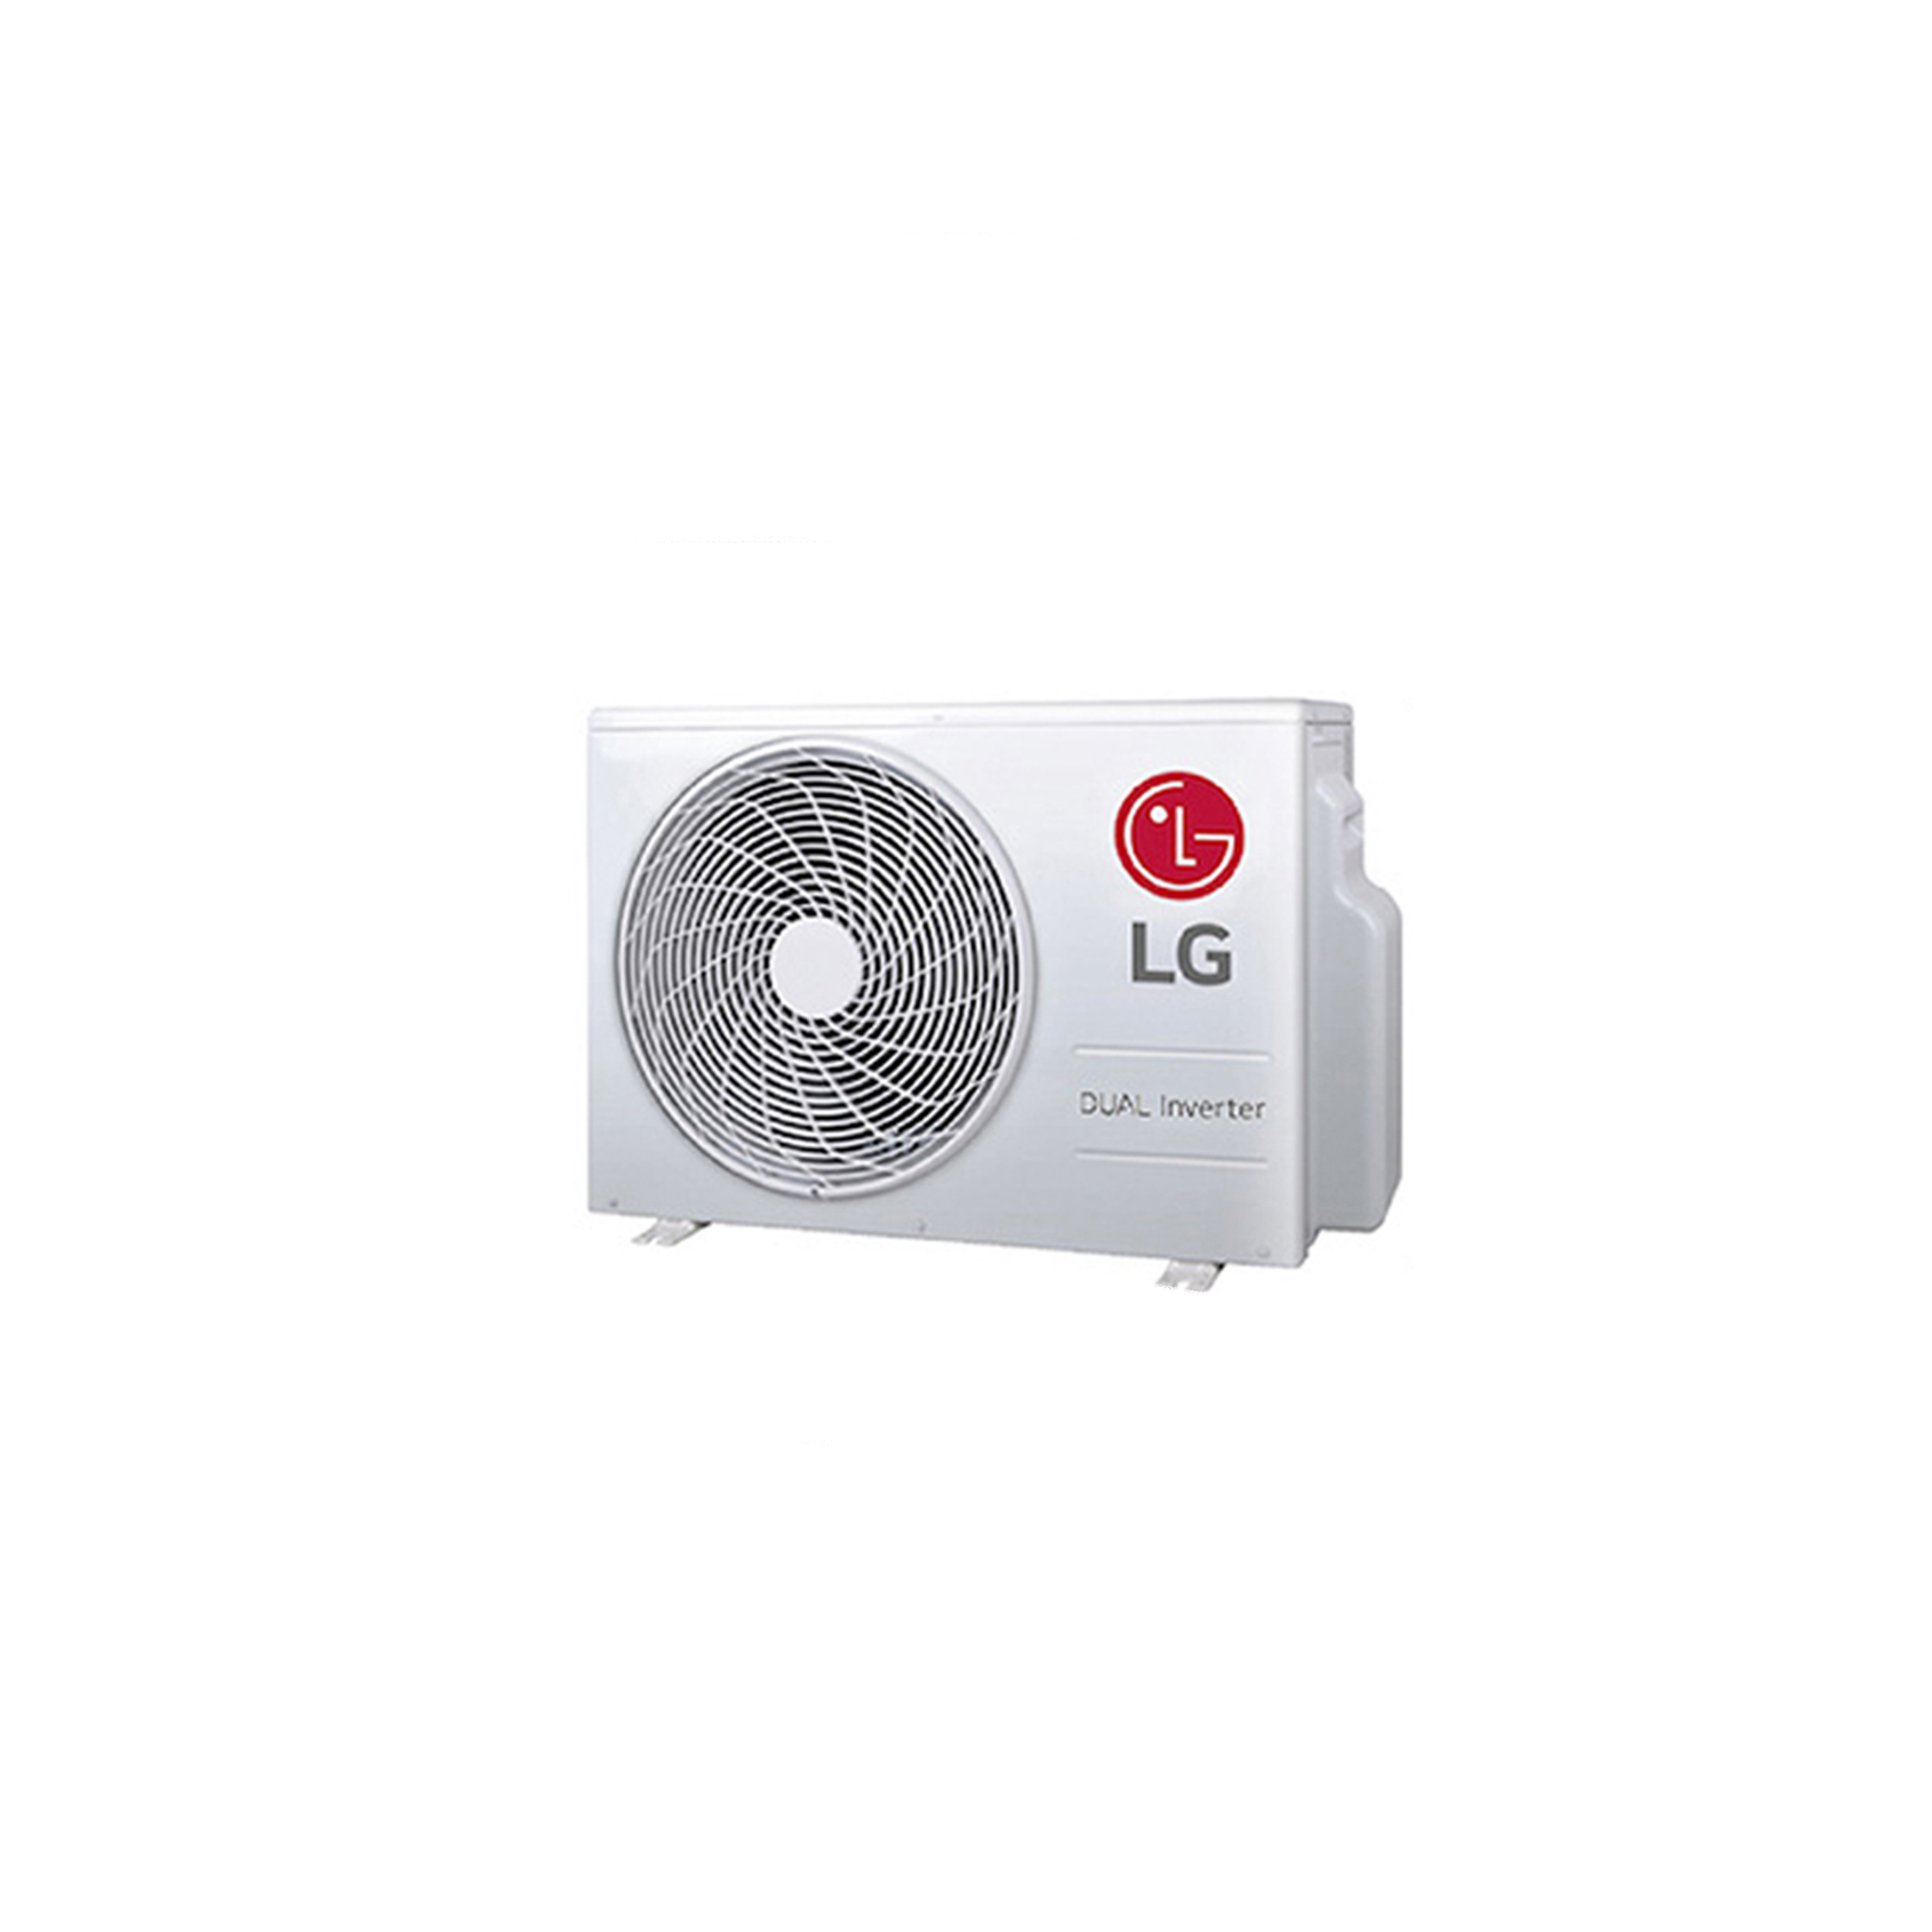 LG樂金 旗艦系列 變頻冷暖分離式空調 LSN28DHP LSU28DHP 免卡分期